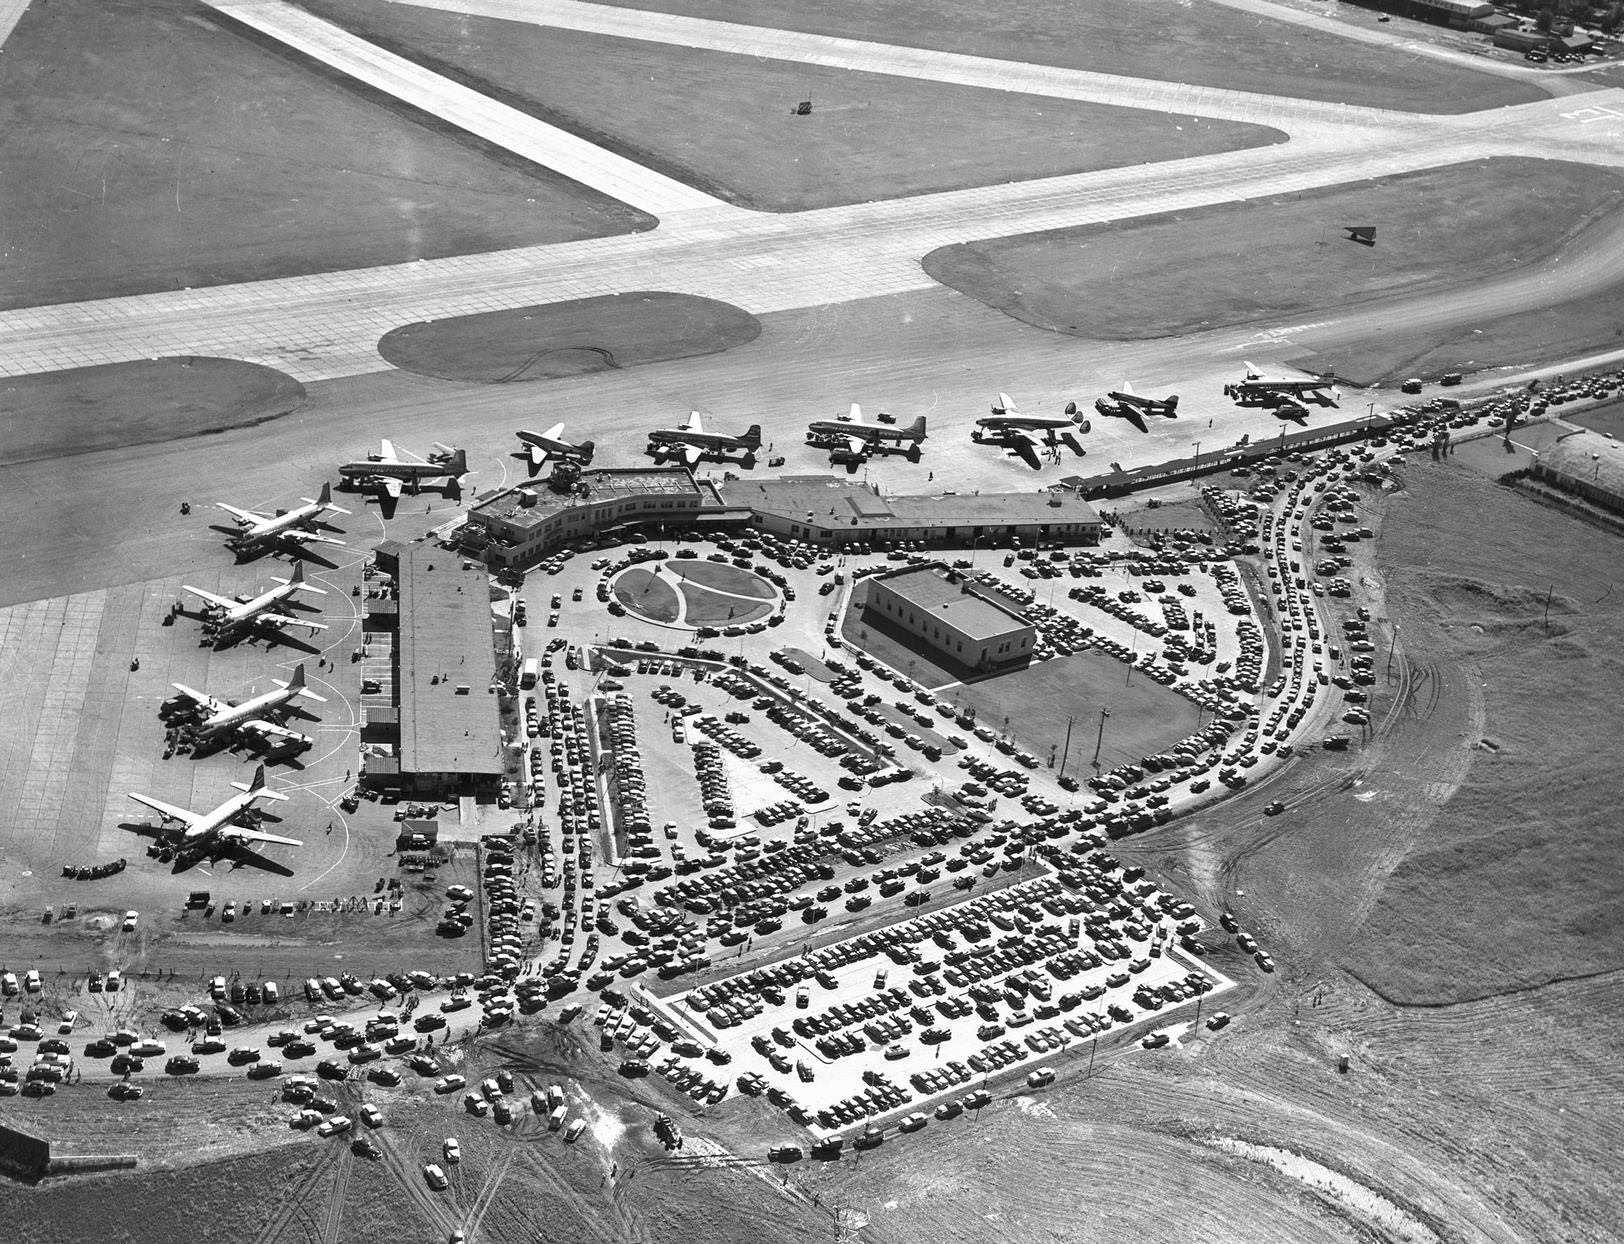 An aerial photograph featuring the Dallas Love Field in Dallas, Texas, 1950